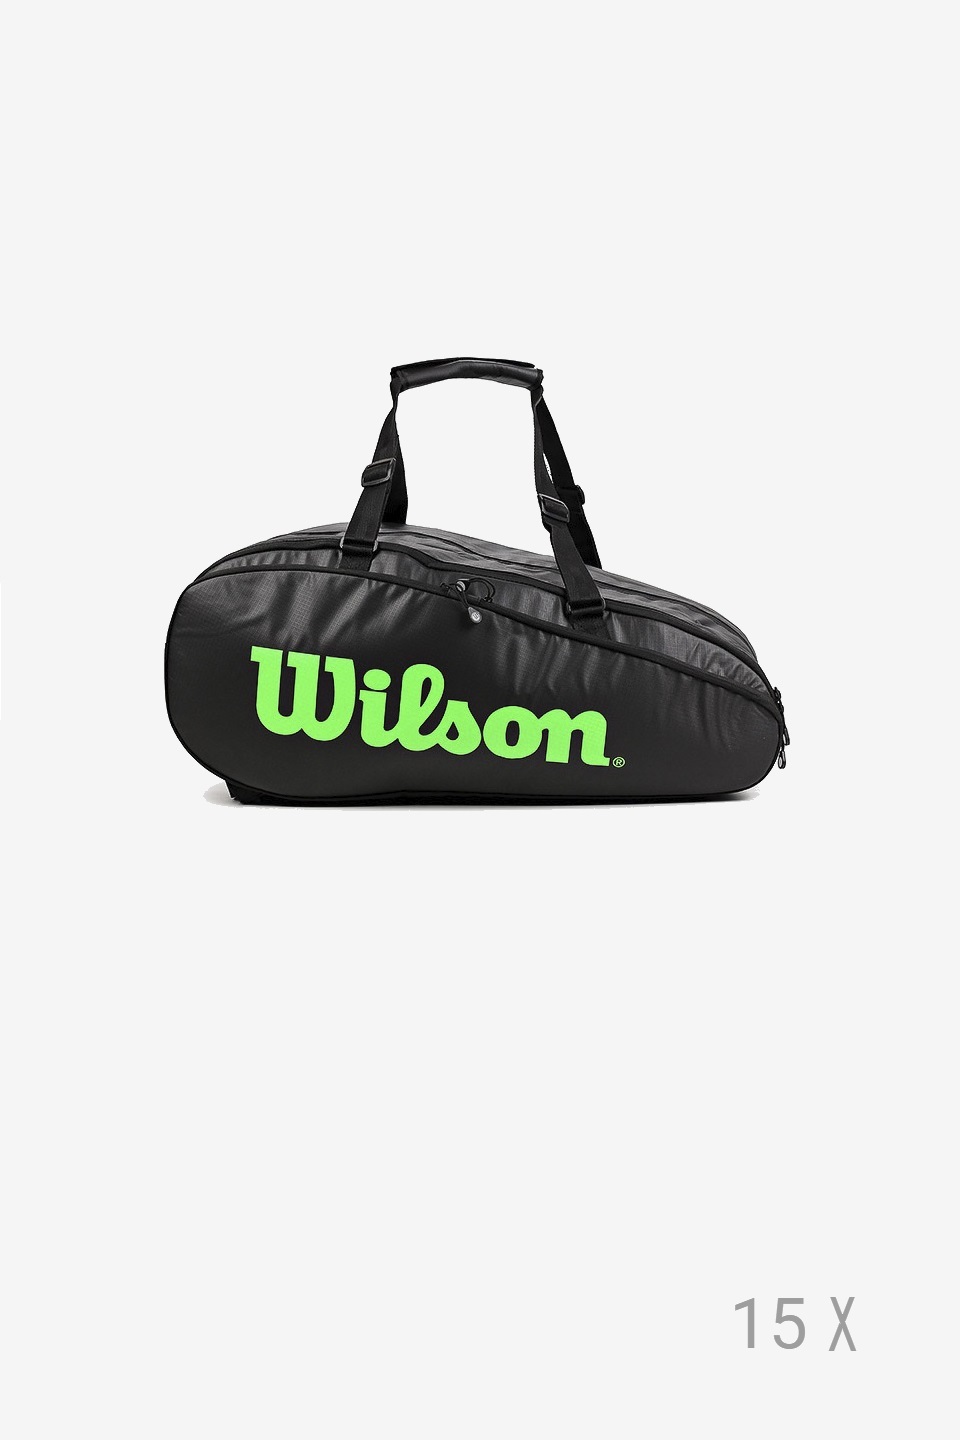 WİLSON - Wilson Super Tour 3 15X Tenis Çantası 